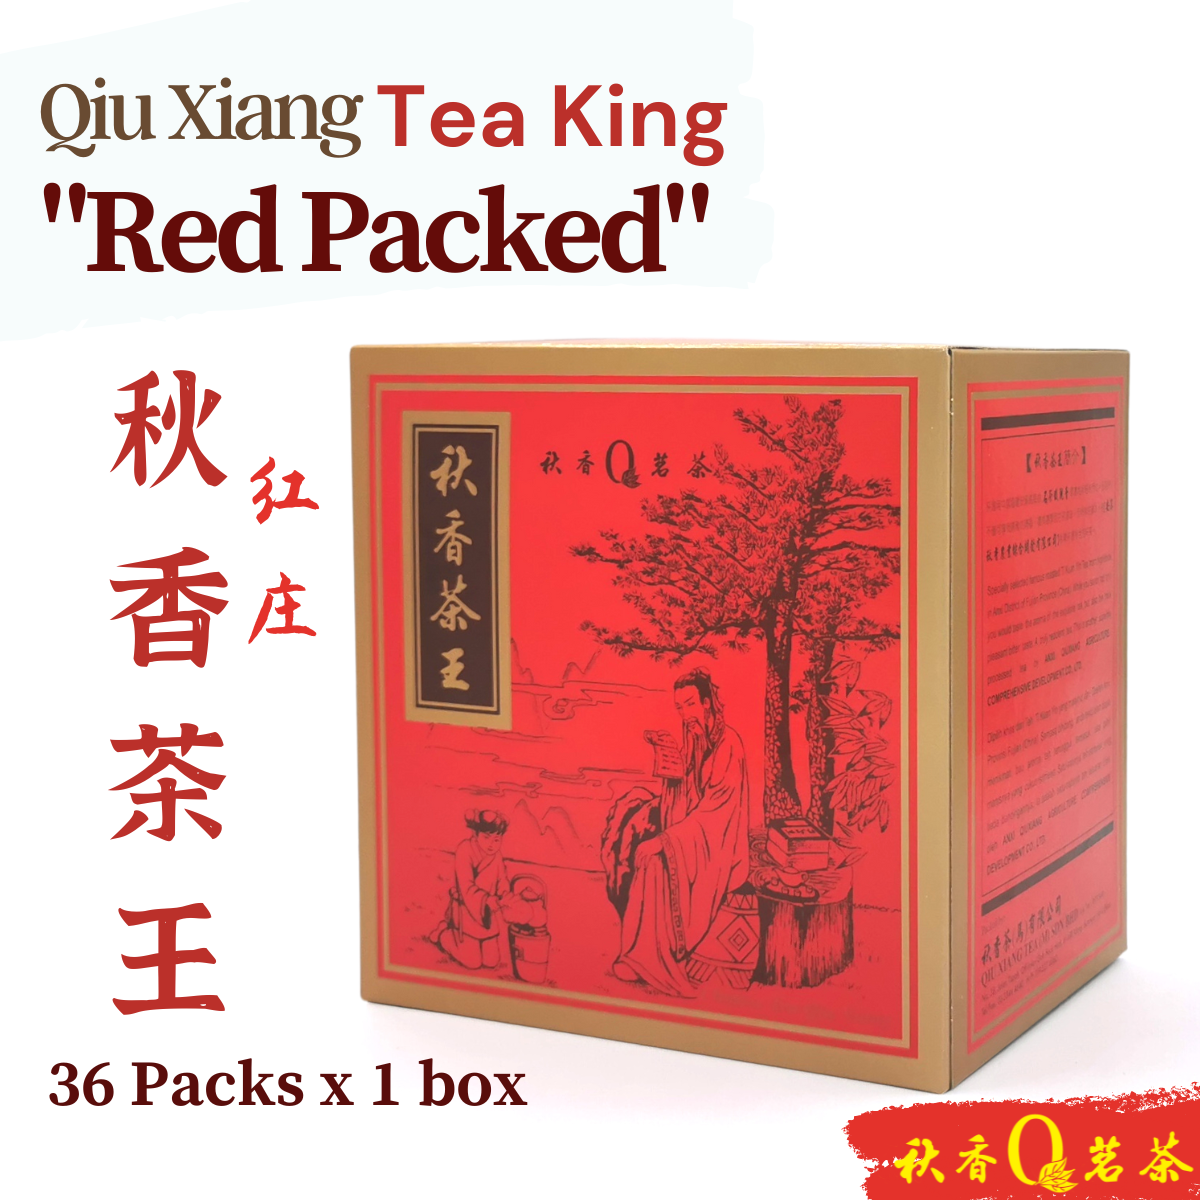 秋香茶王红庄 Qiu Xiang Tea King "Red Pack"【36 pack x 10g】 |【 乌龙茶 Oolong tea 】